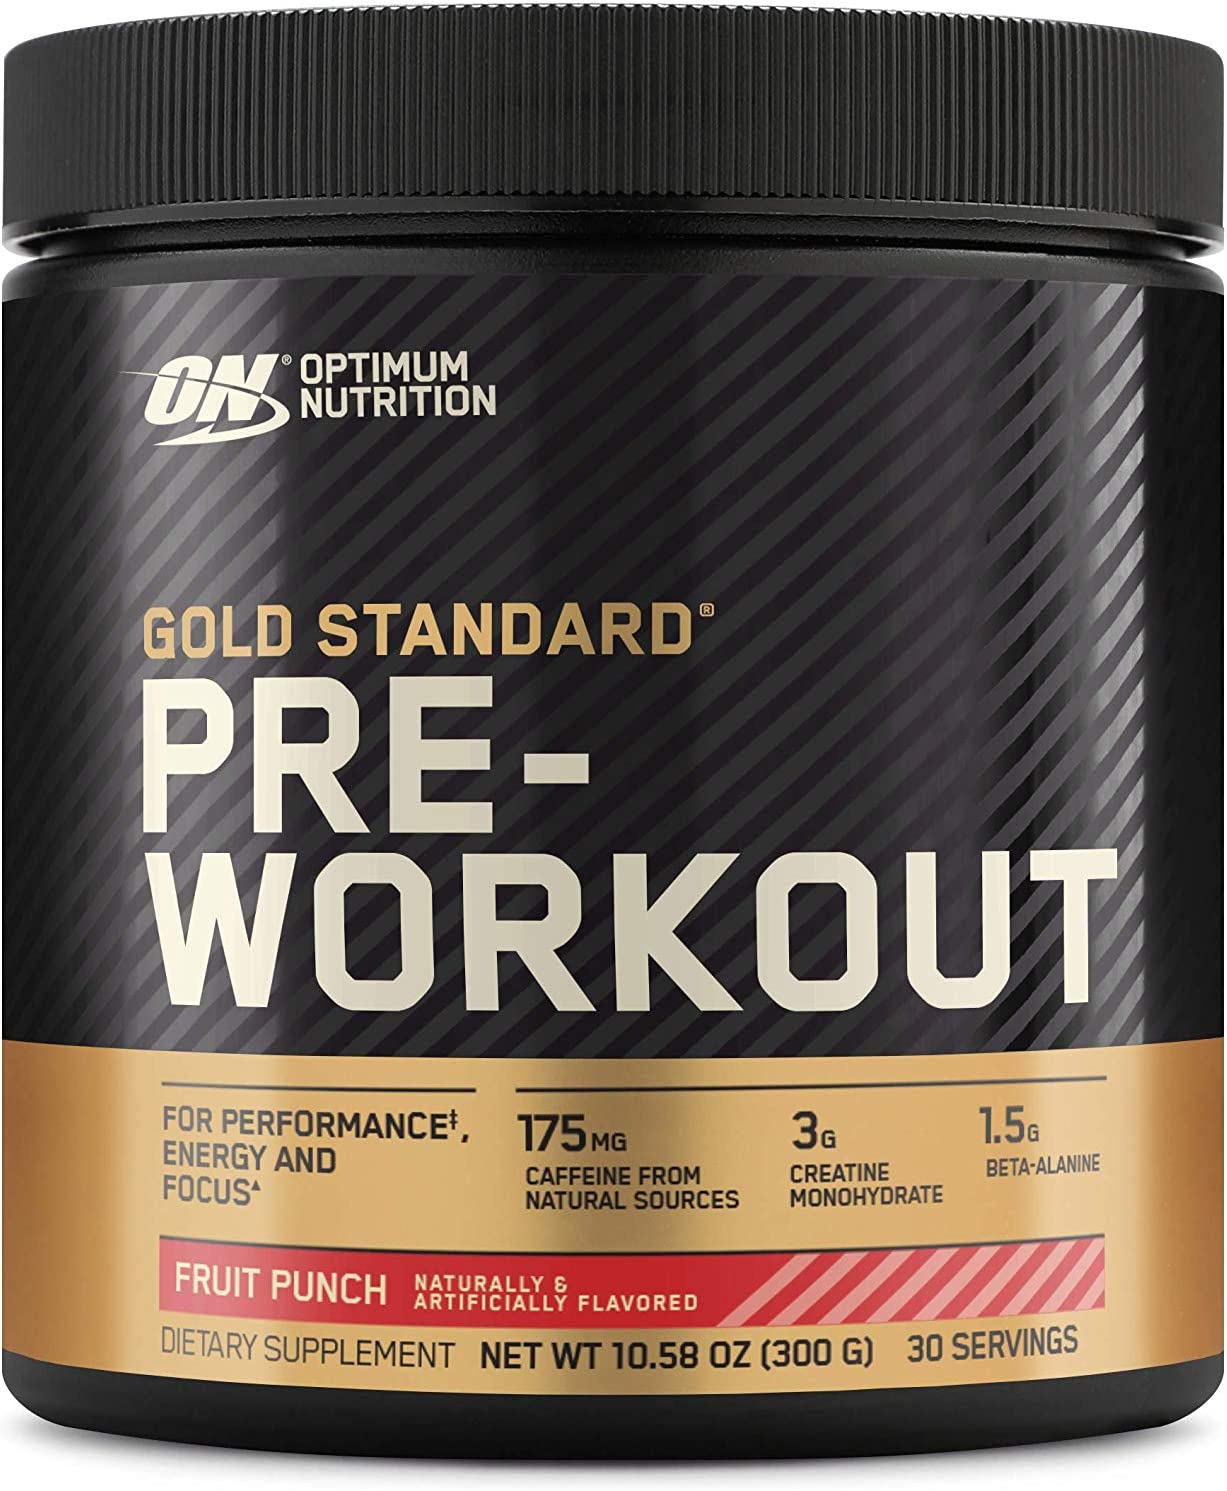 Optimum Nutrition Gold Standard Pre-Workout Reviews